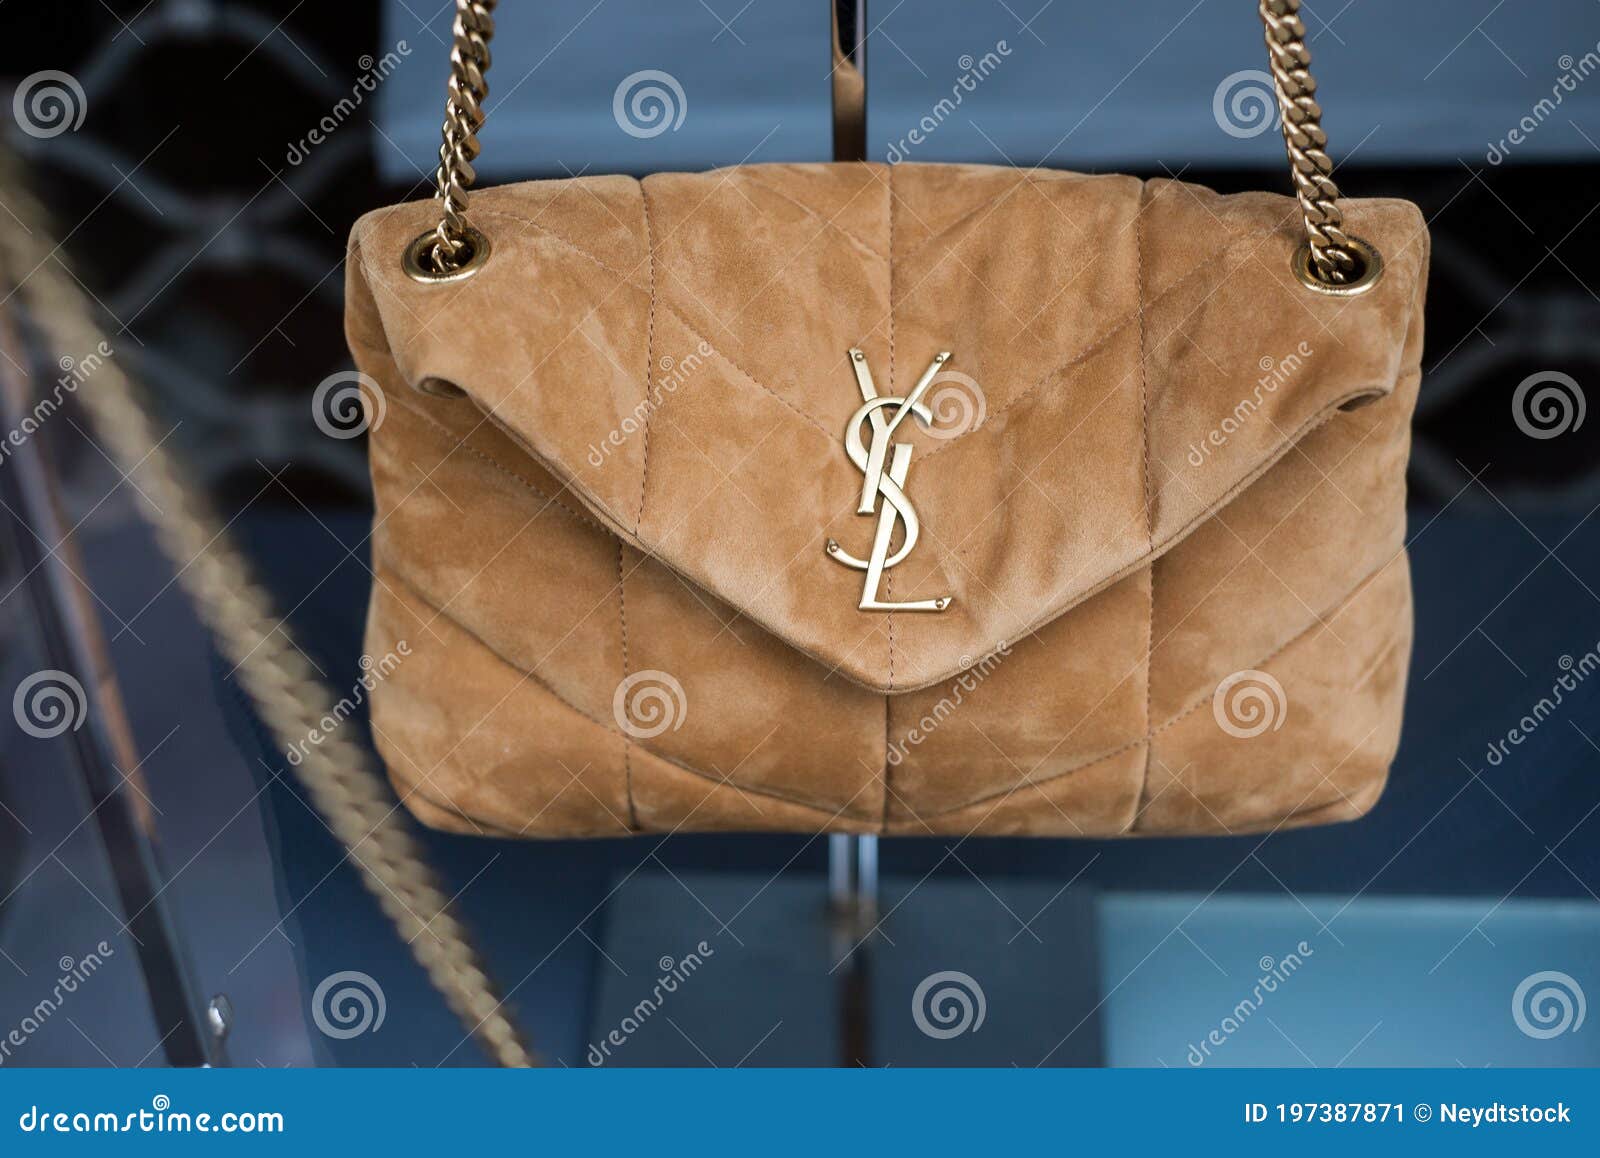 Yves Saint Laurent Handbags for sale in Mclellan, Florida | Facebook  Marketplace | Facebook